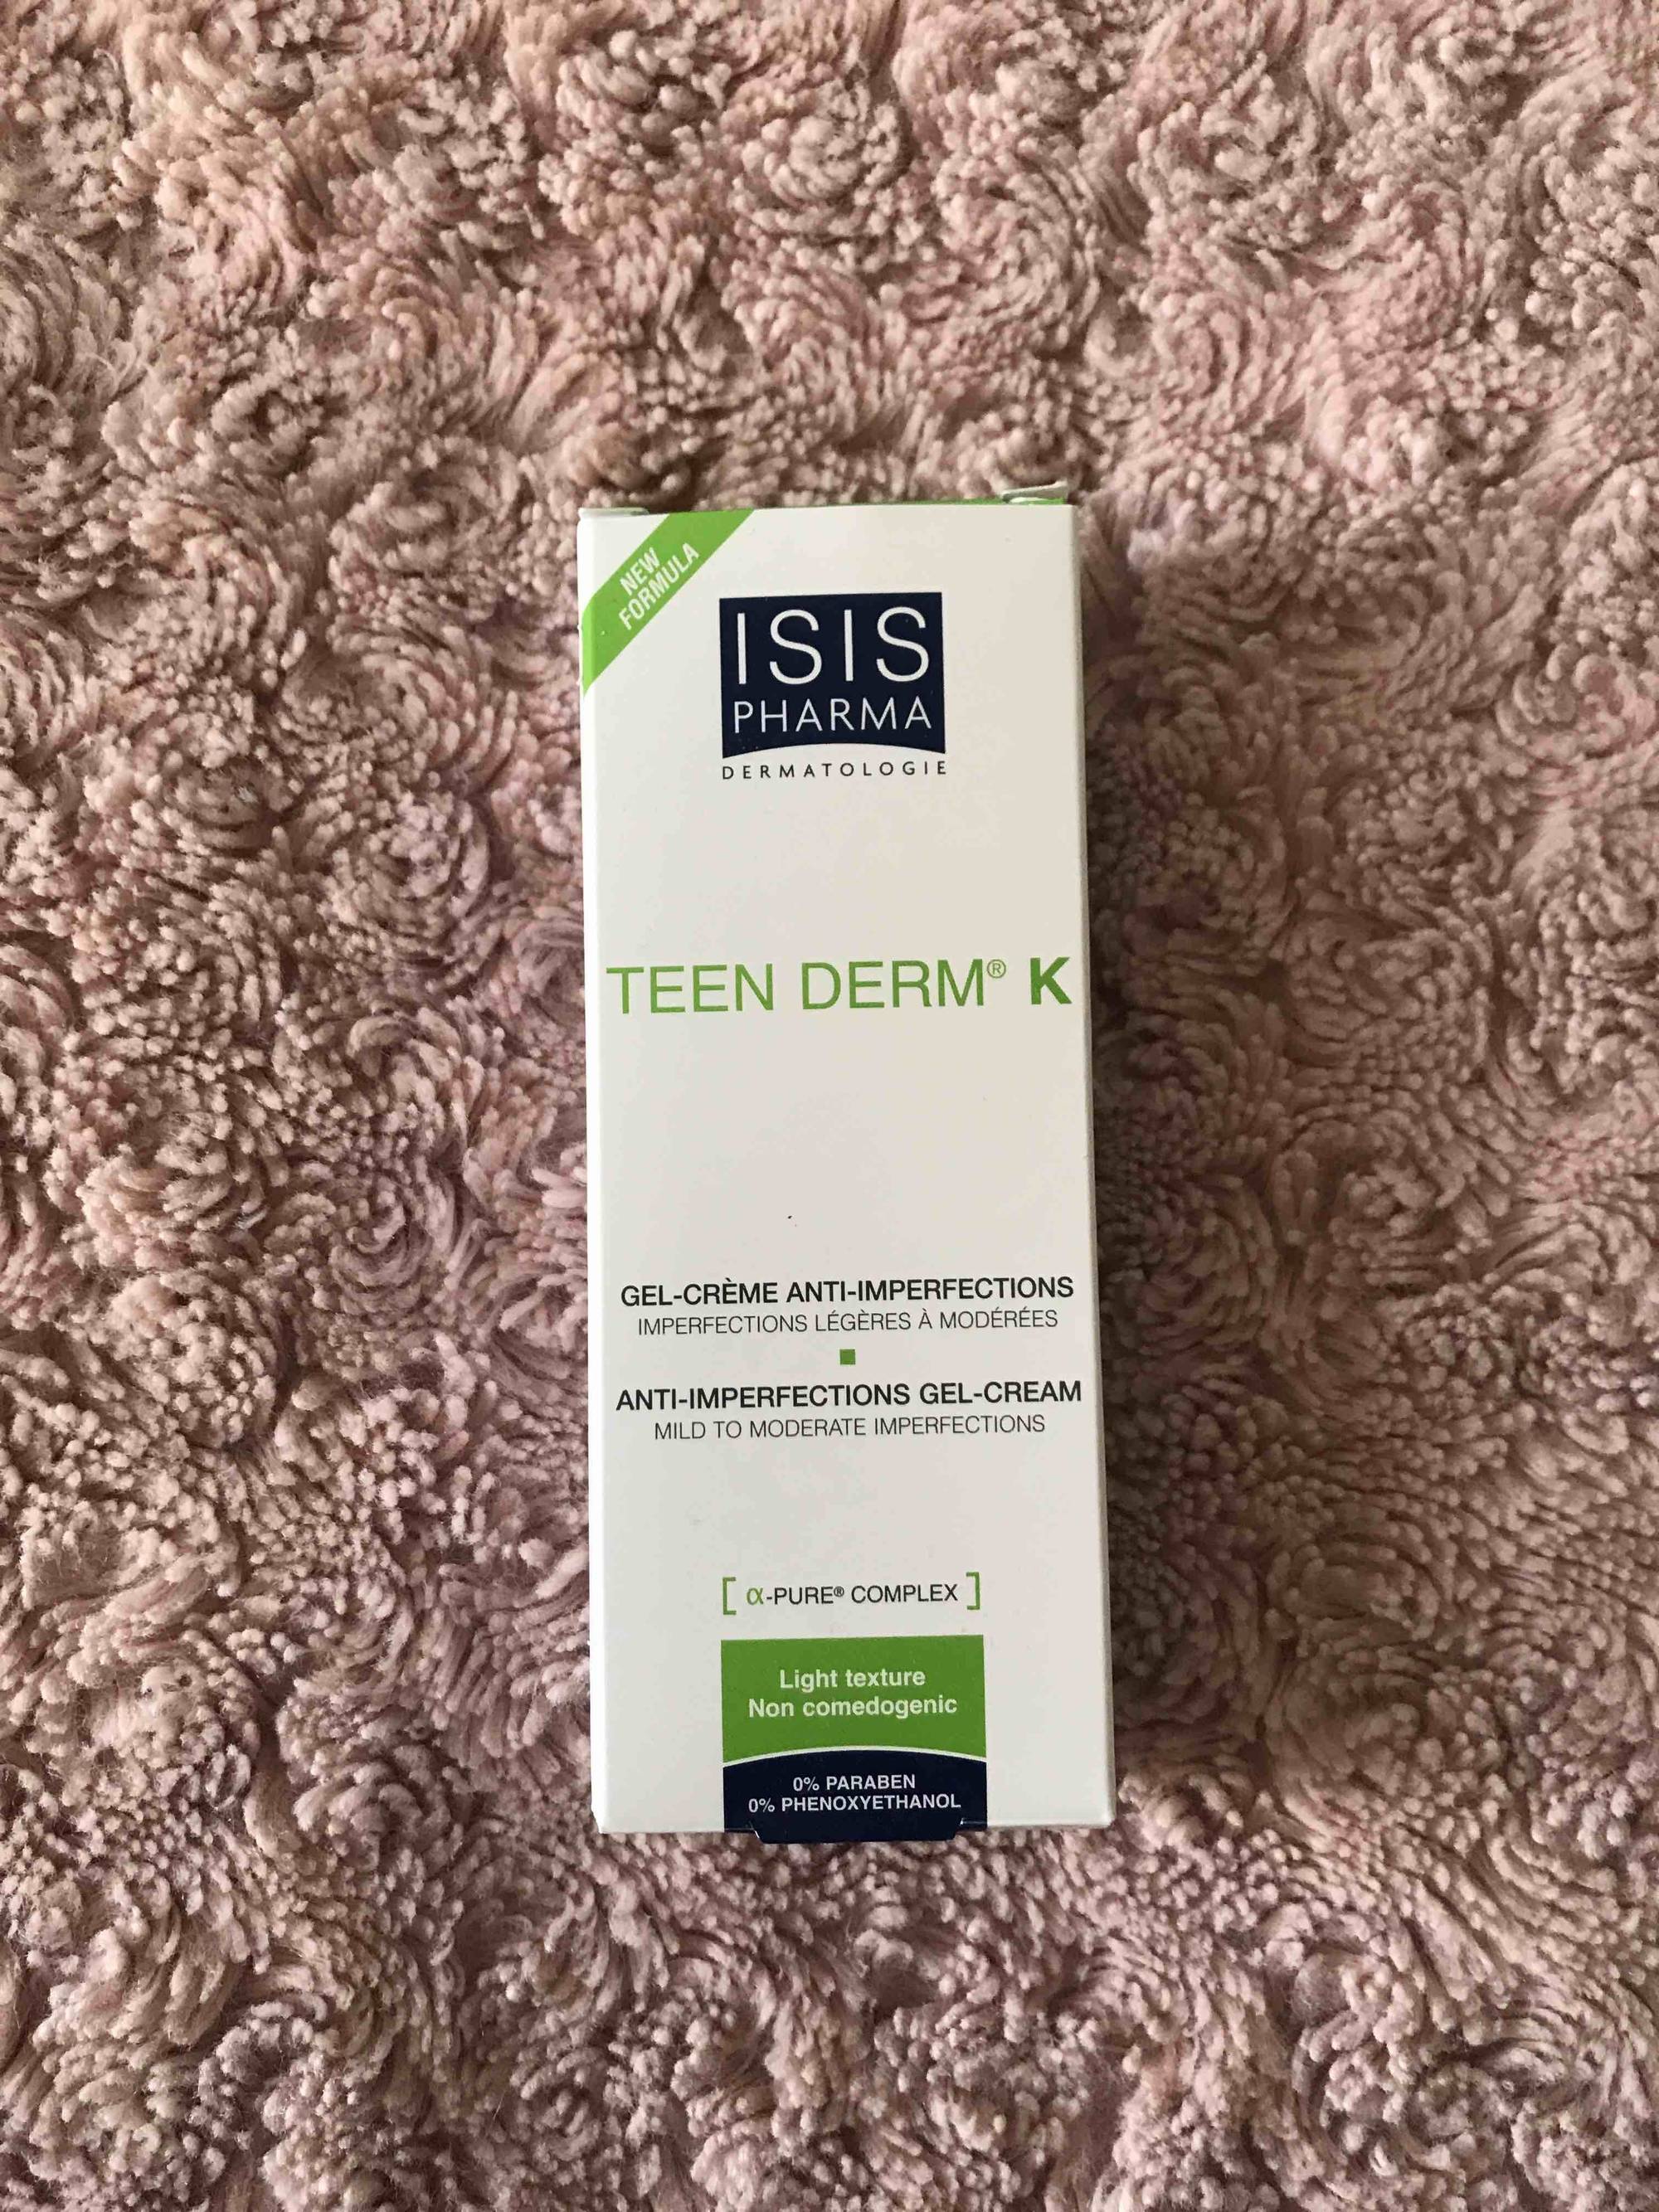 ISIS PHARMA - Teen derm K - Gel-crème anti-imperfections